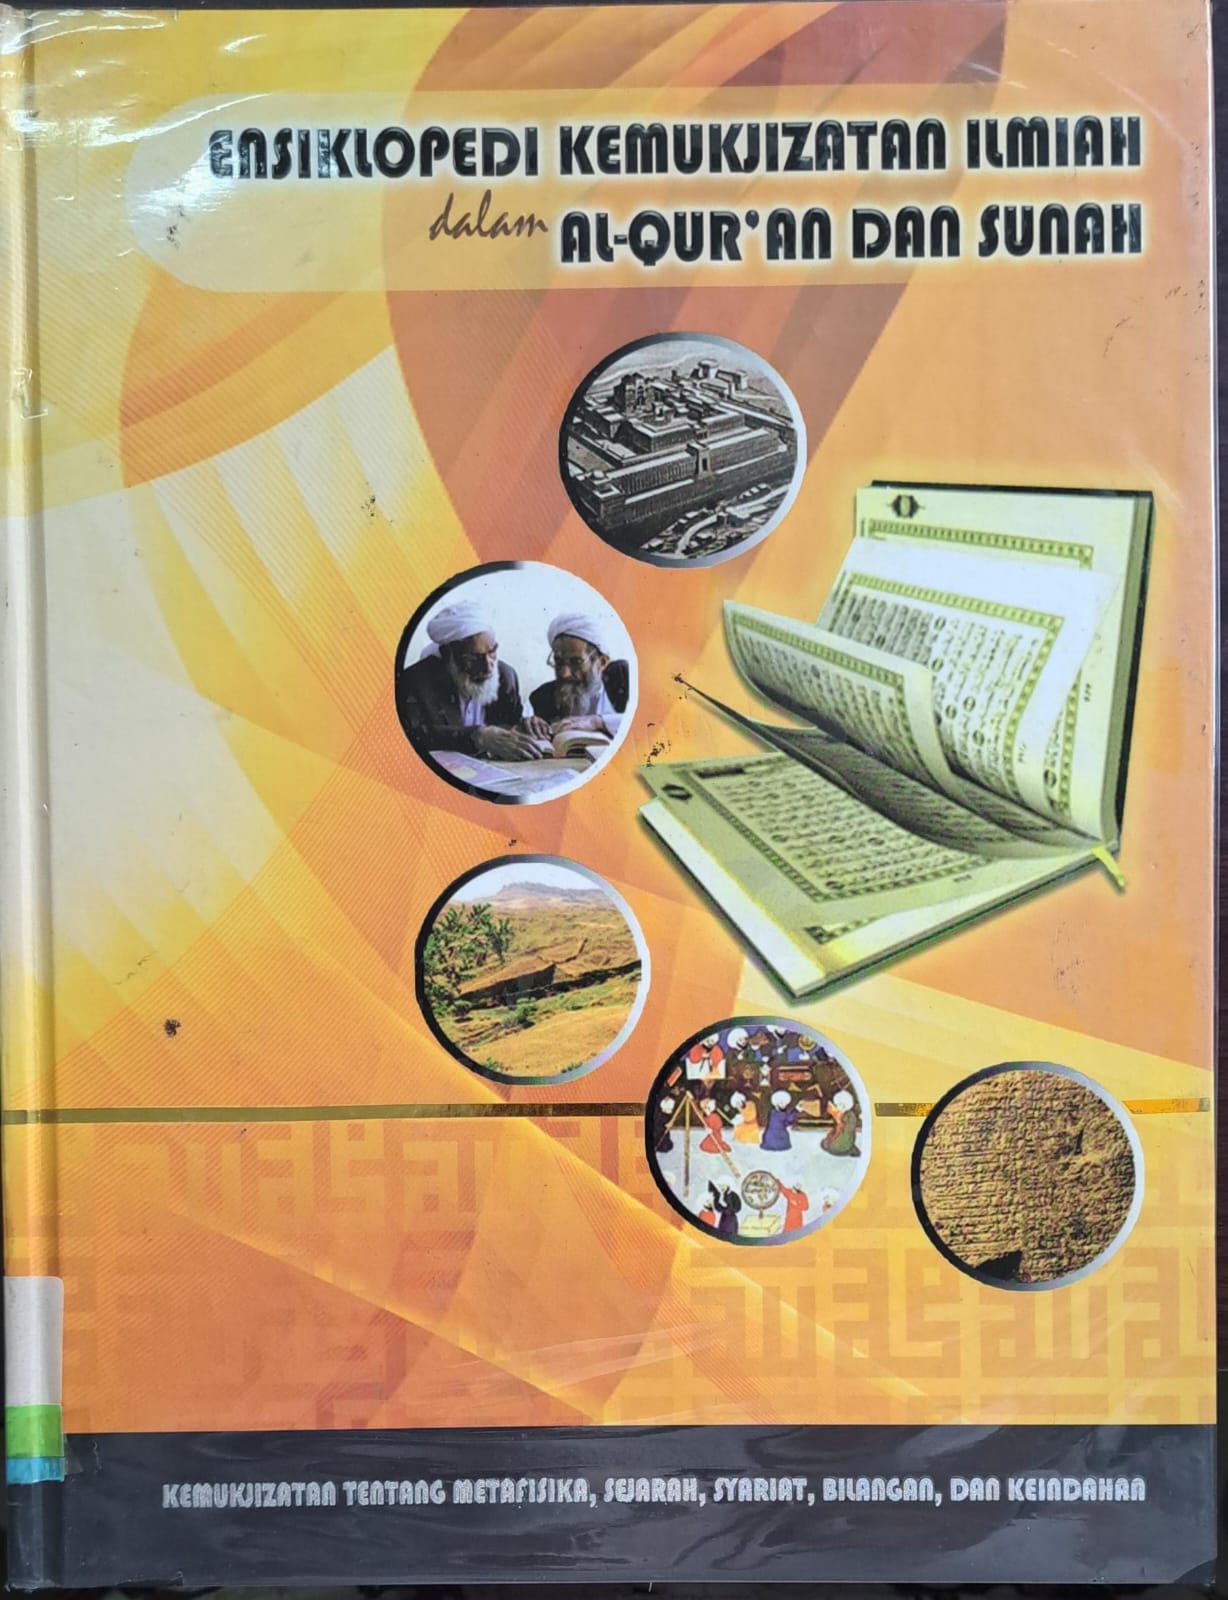 Ensiklopedi kemukjizatan ilmiah dalam al-qur'an dan sunnah '1' :  Kemukjizatan tentang metafisika,sejarah,syariat,bilangan, dan keindahan